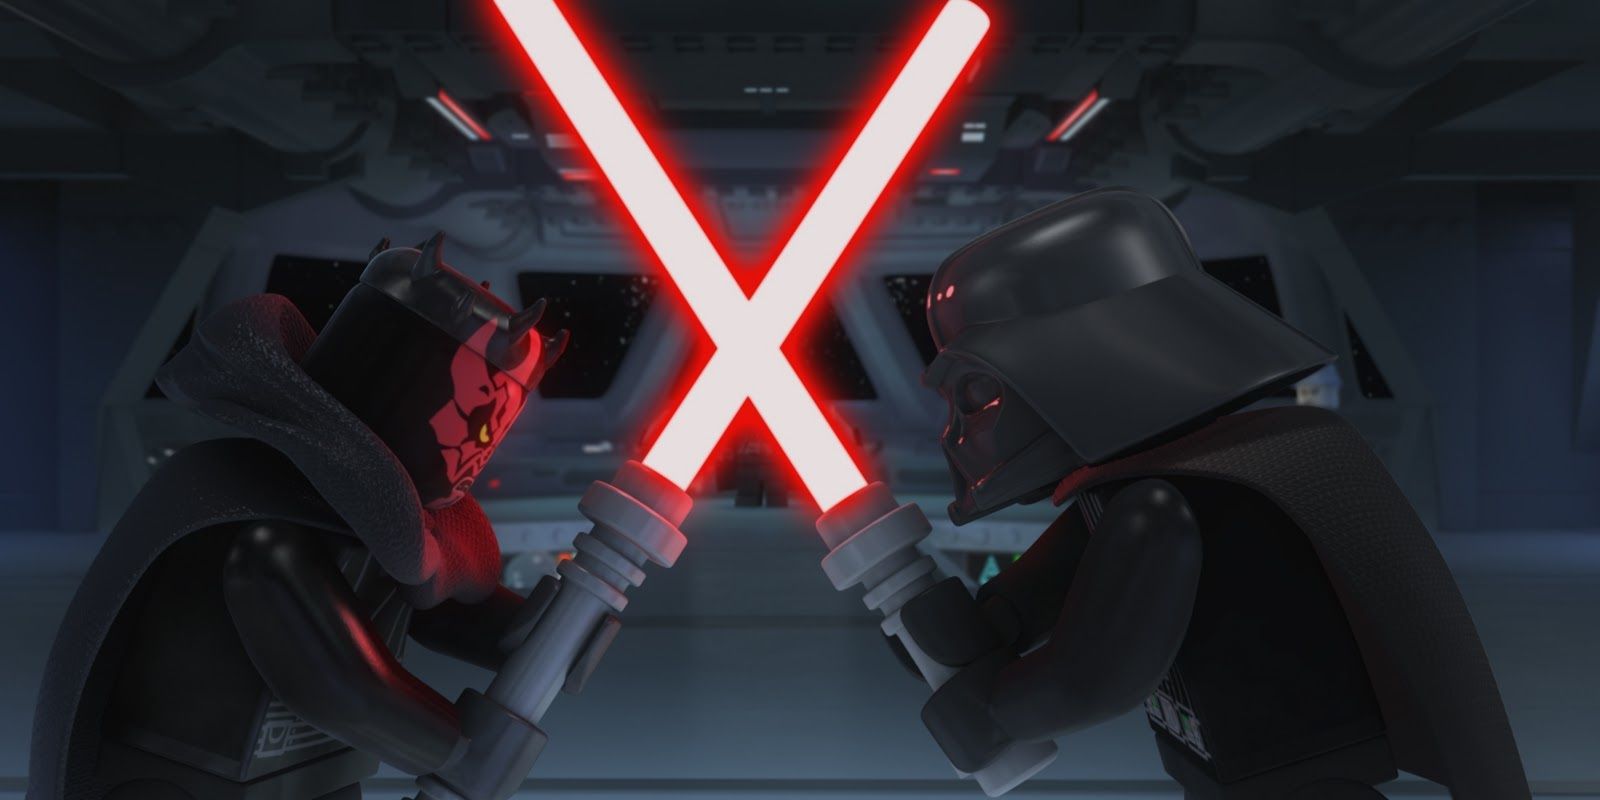 Lego Star Wars Darth Maul vs. Darth Vader